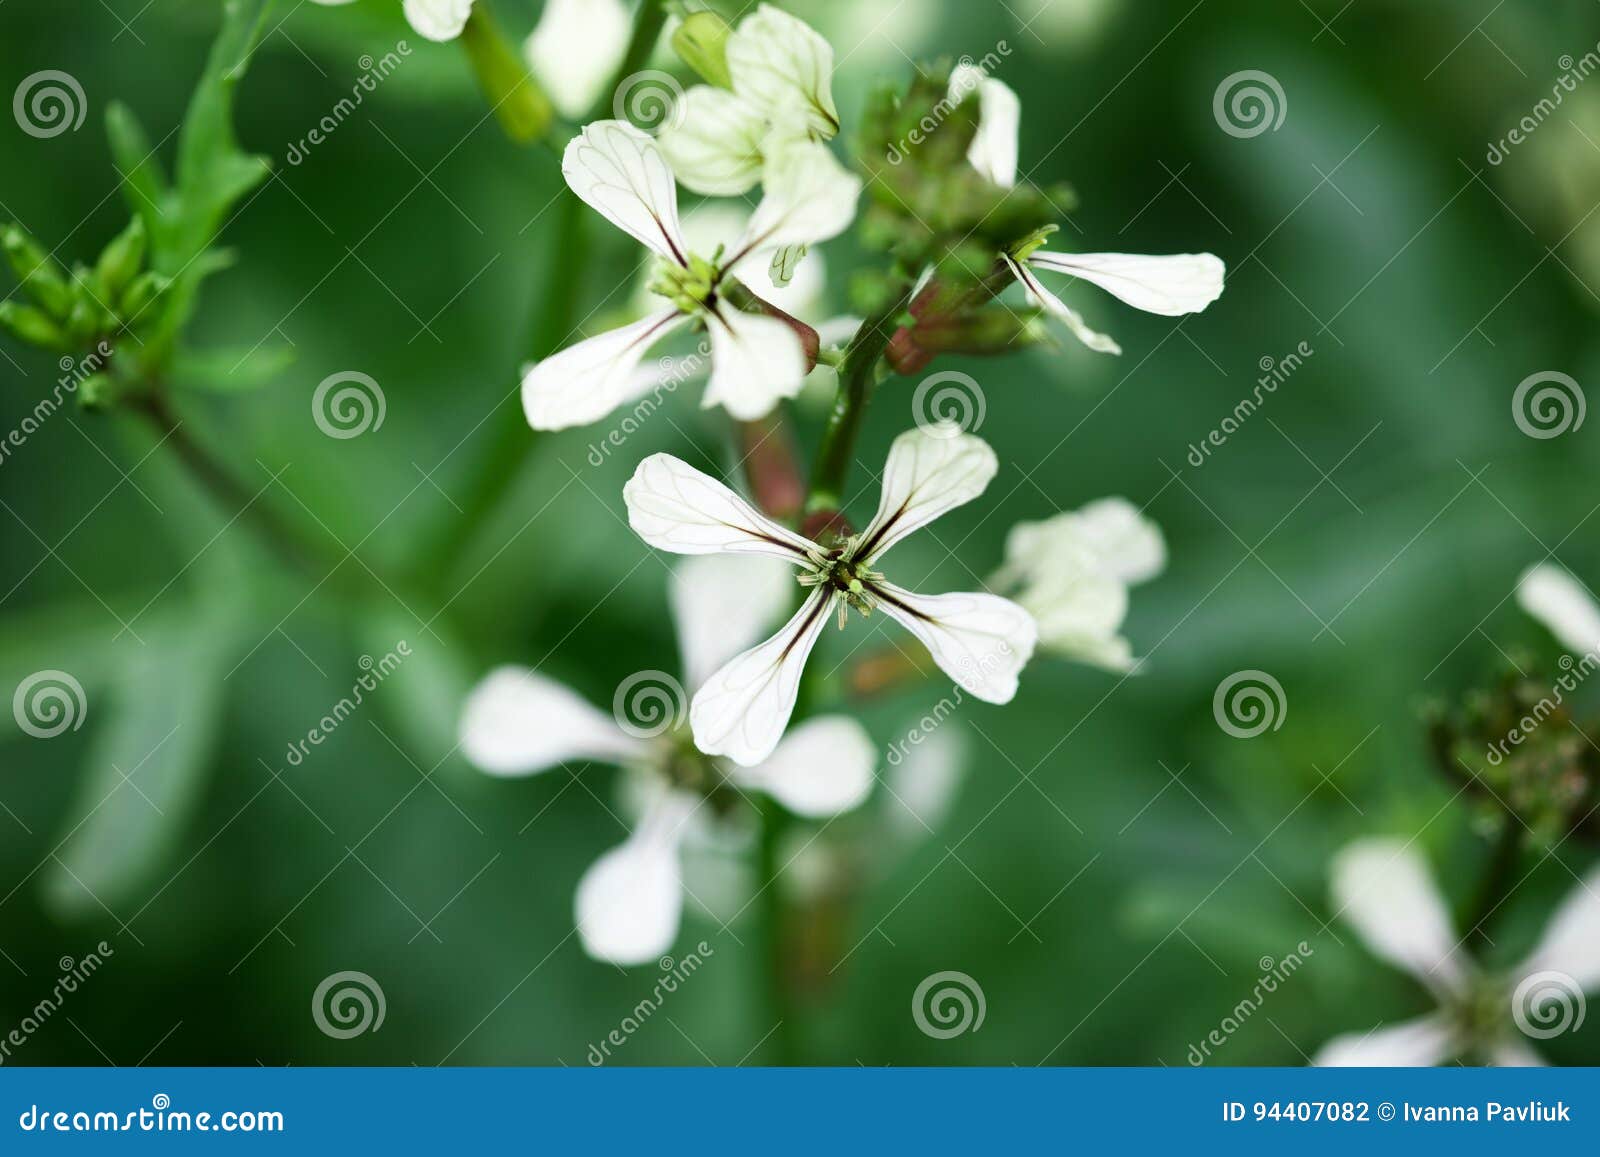 arugula flower. eruca lativa plant. rucola blossom. farmland arugula. rocket salad. food spice and herbs. spring garden in